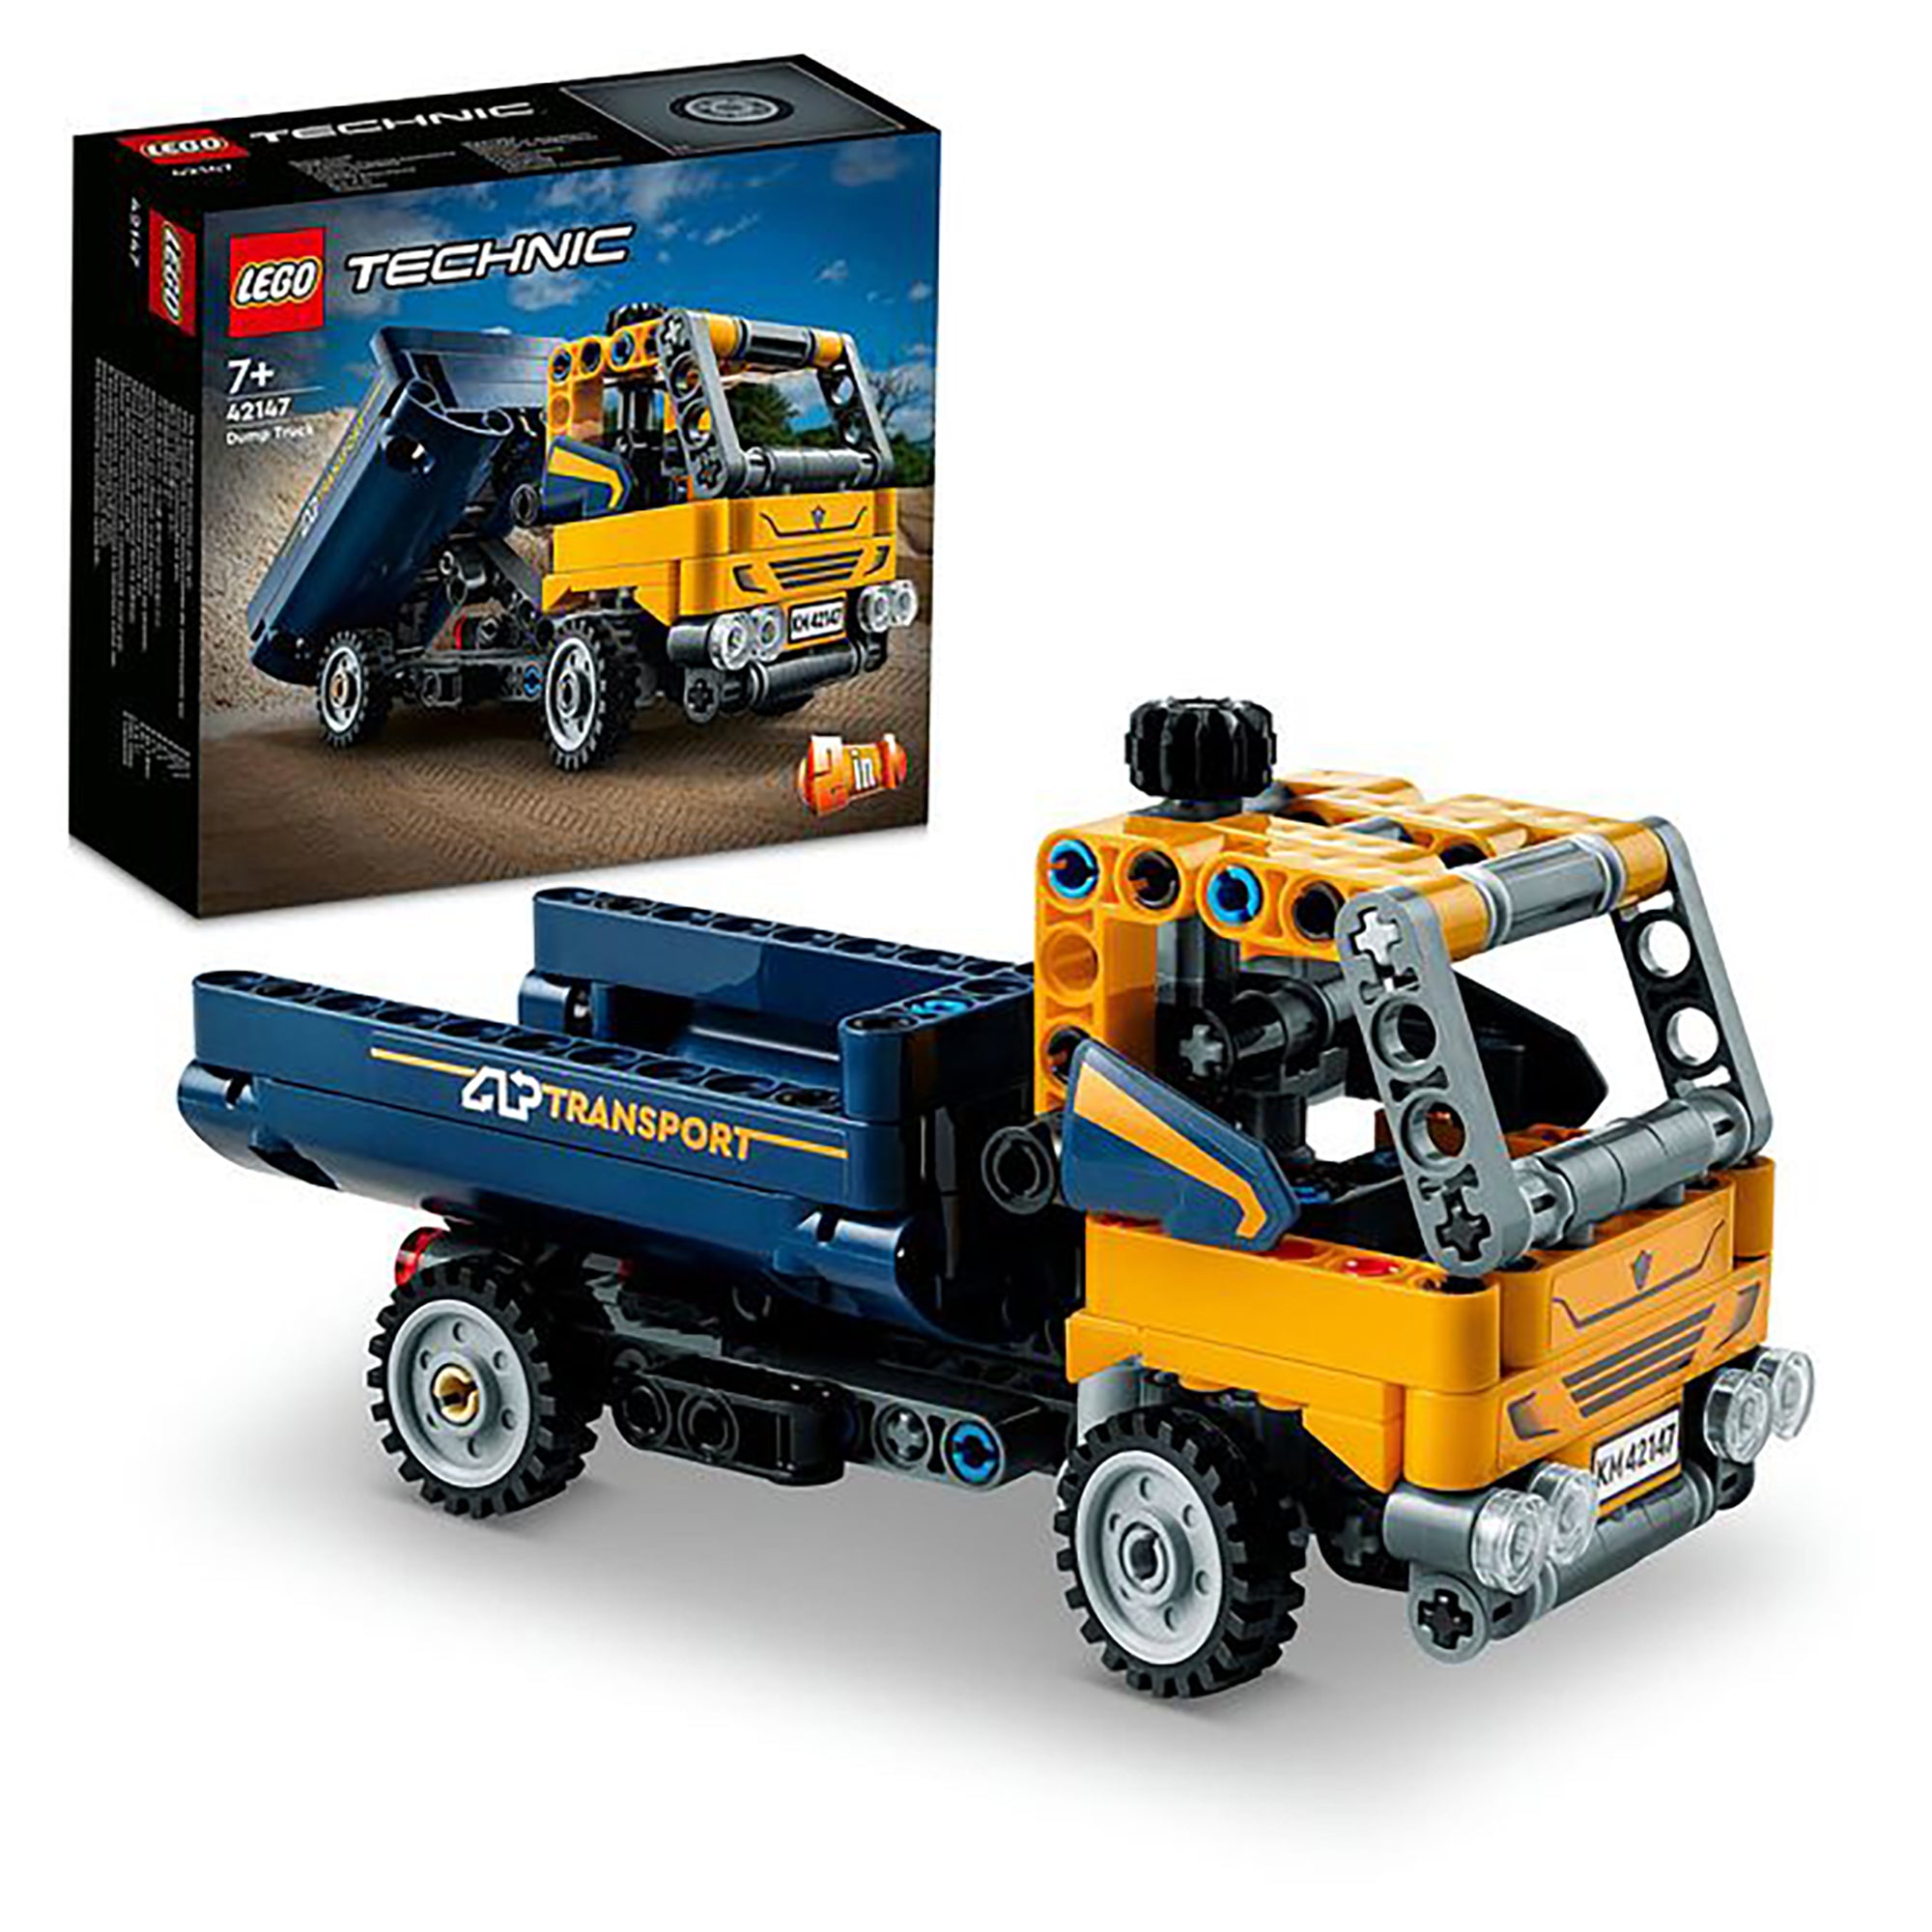 LEGO Technic Dump Truck 42147 (177 pieces)